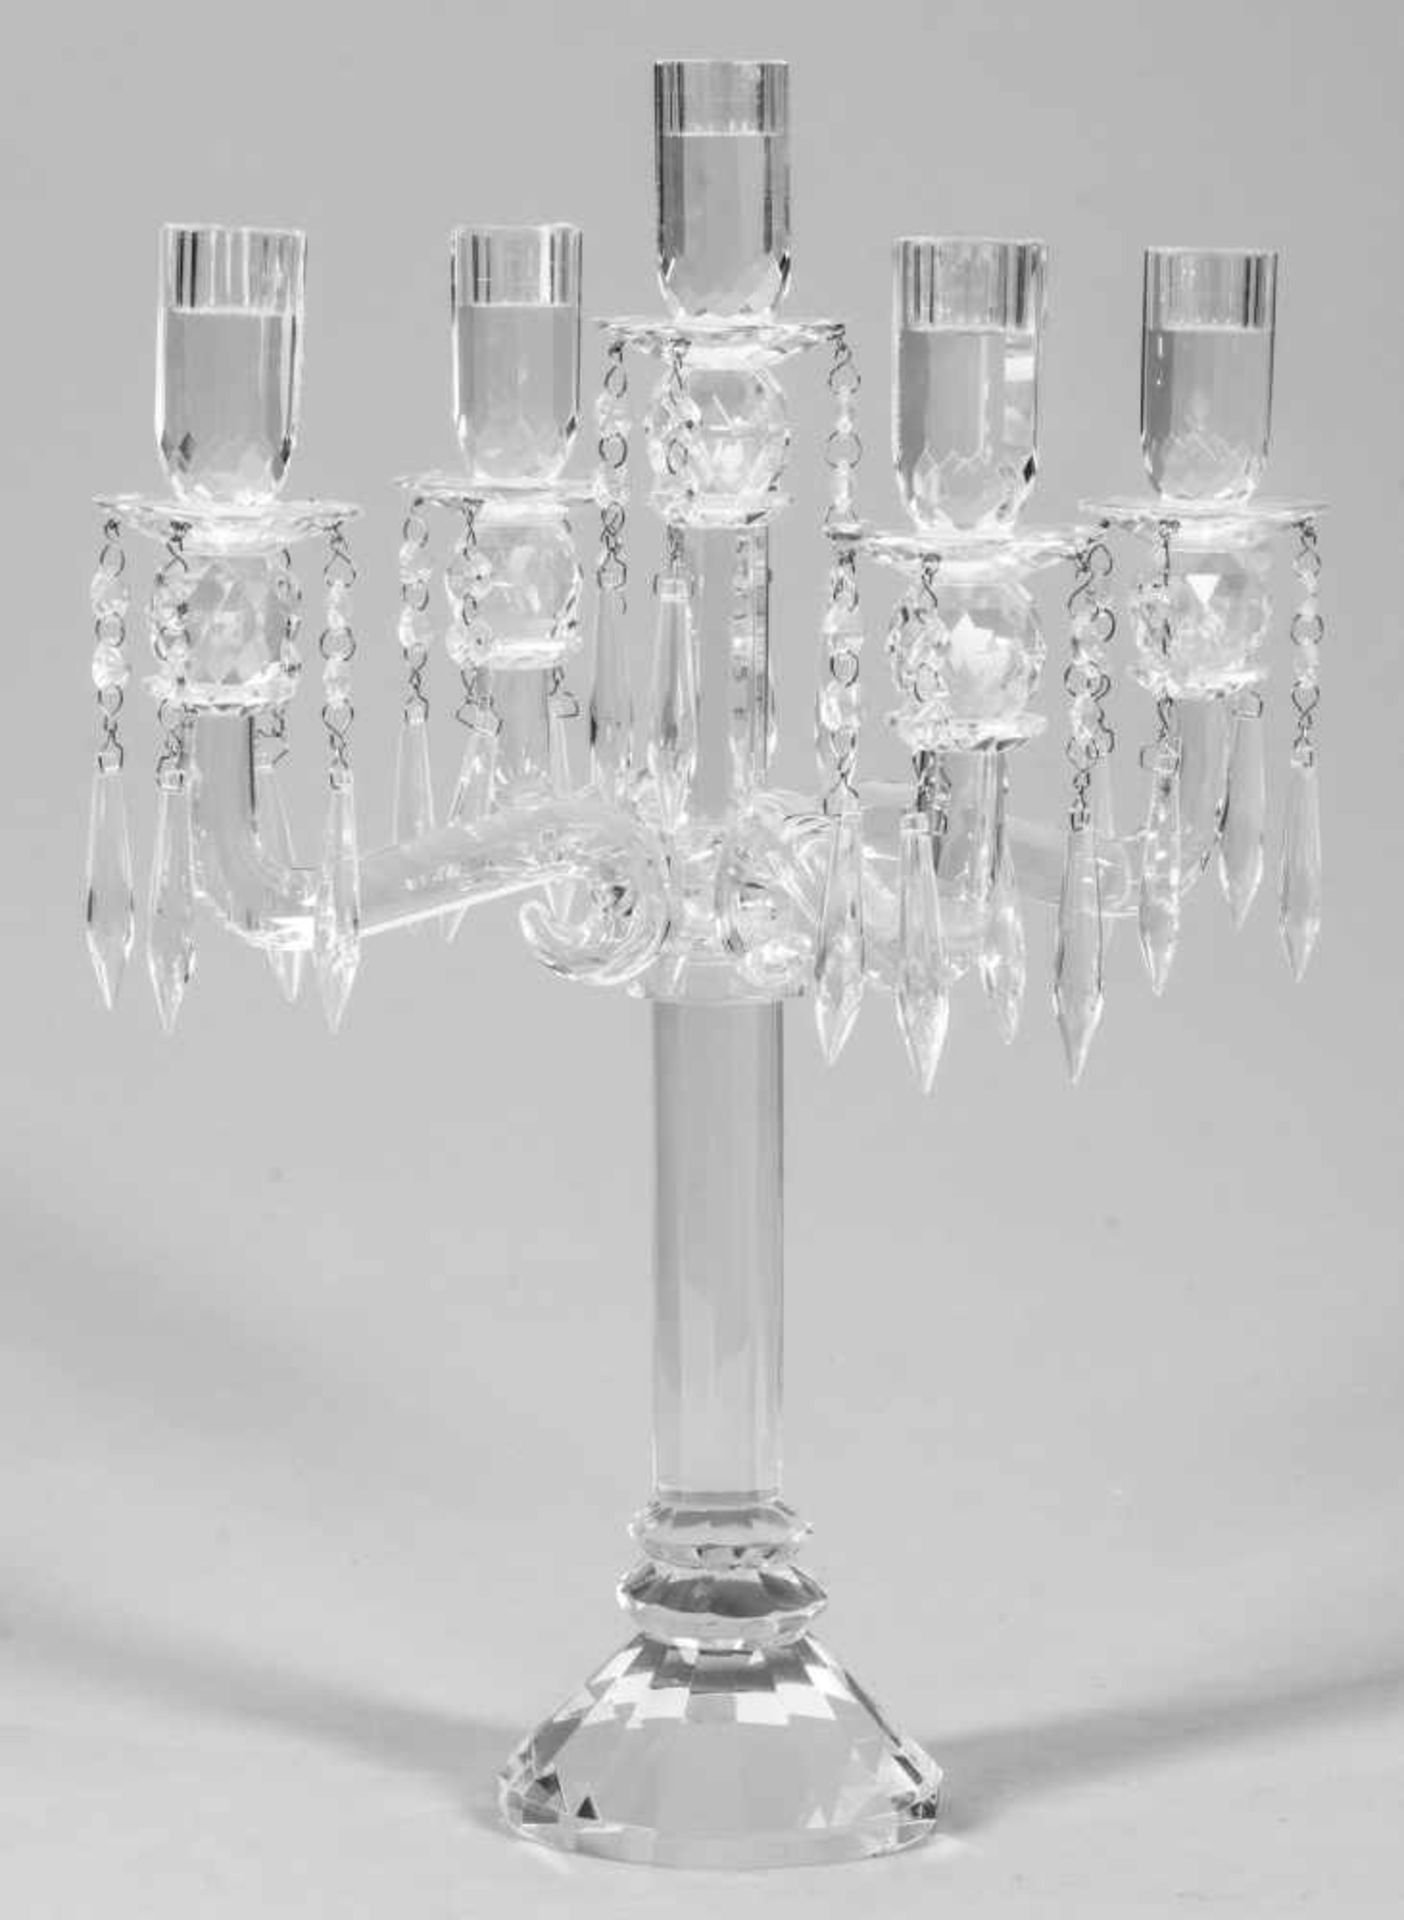 Kristall-Leuchter5-flg.; Farbloses Kristallglas, facettiert geschliffen. Kegelförmiger Fuß,